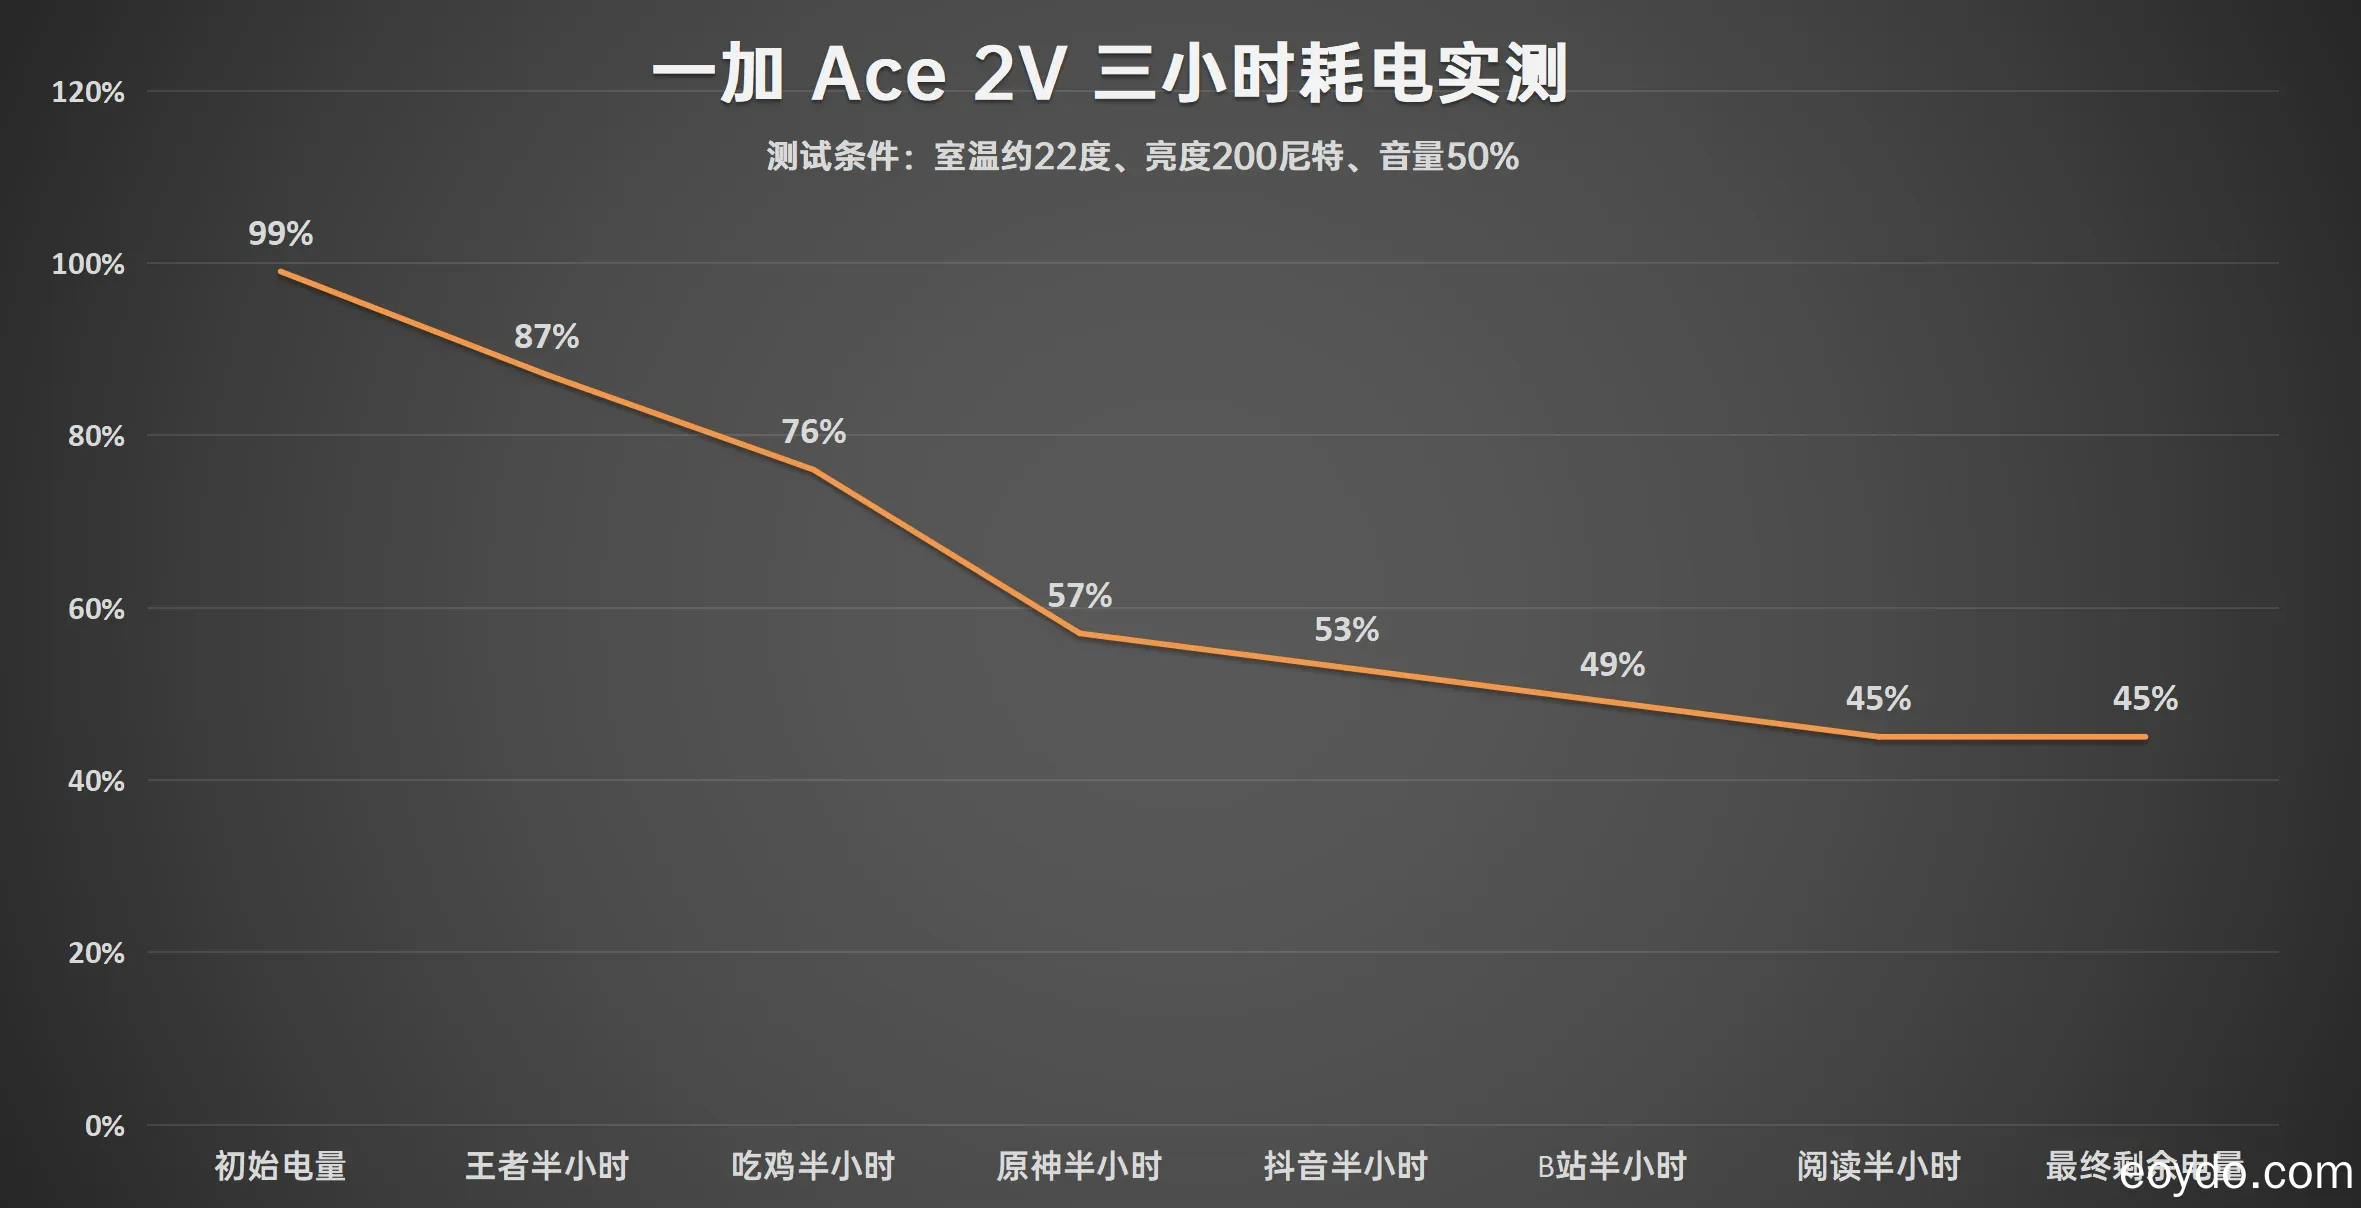 Análise do OnePlus Ace 2V